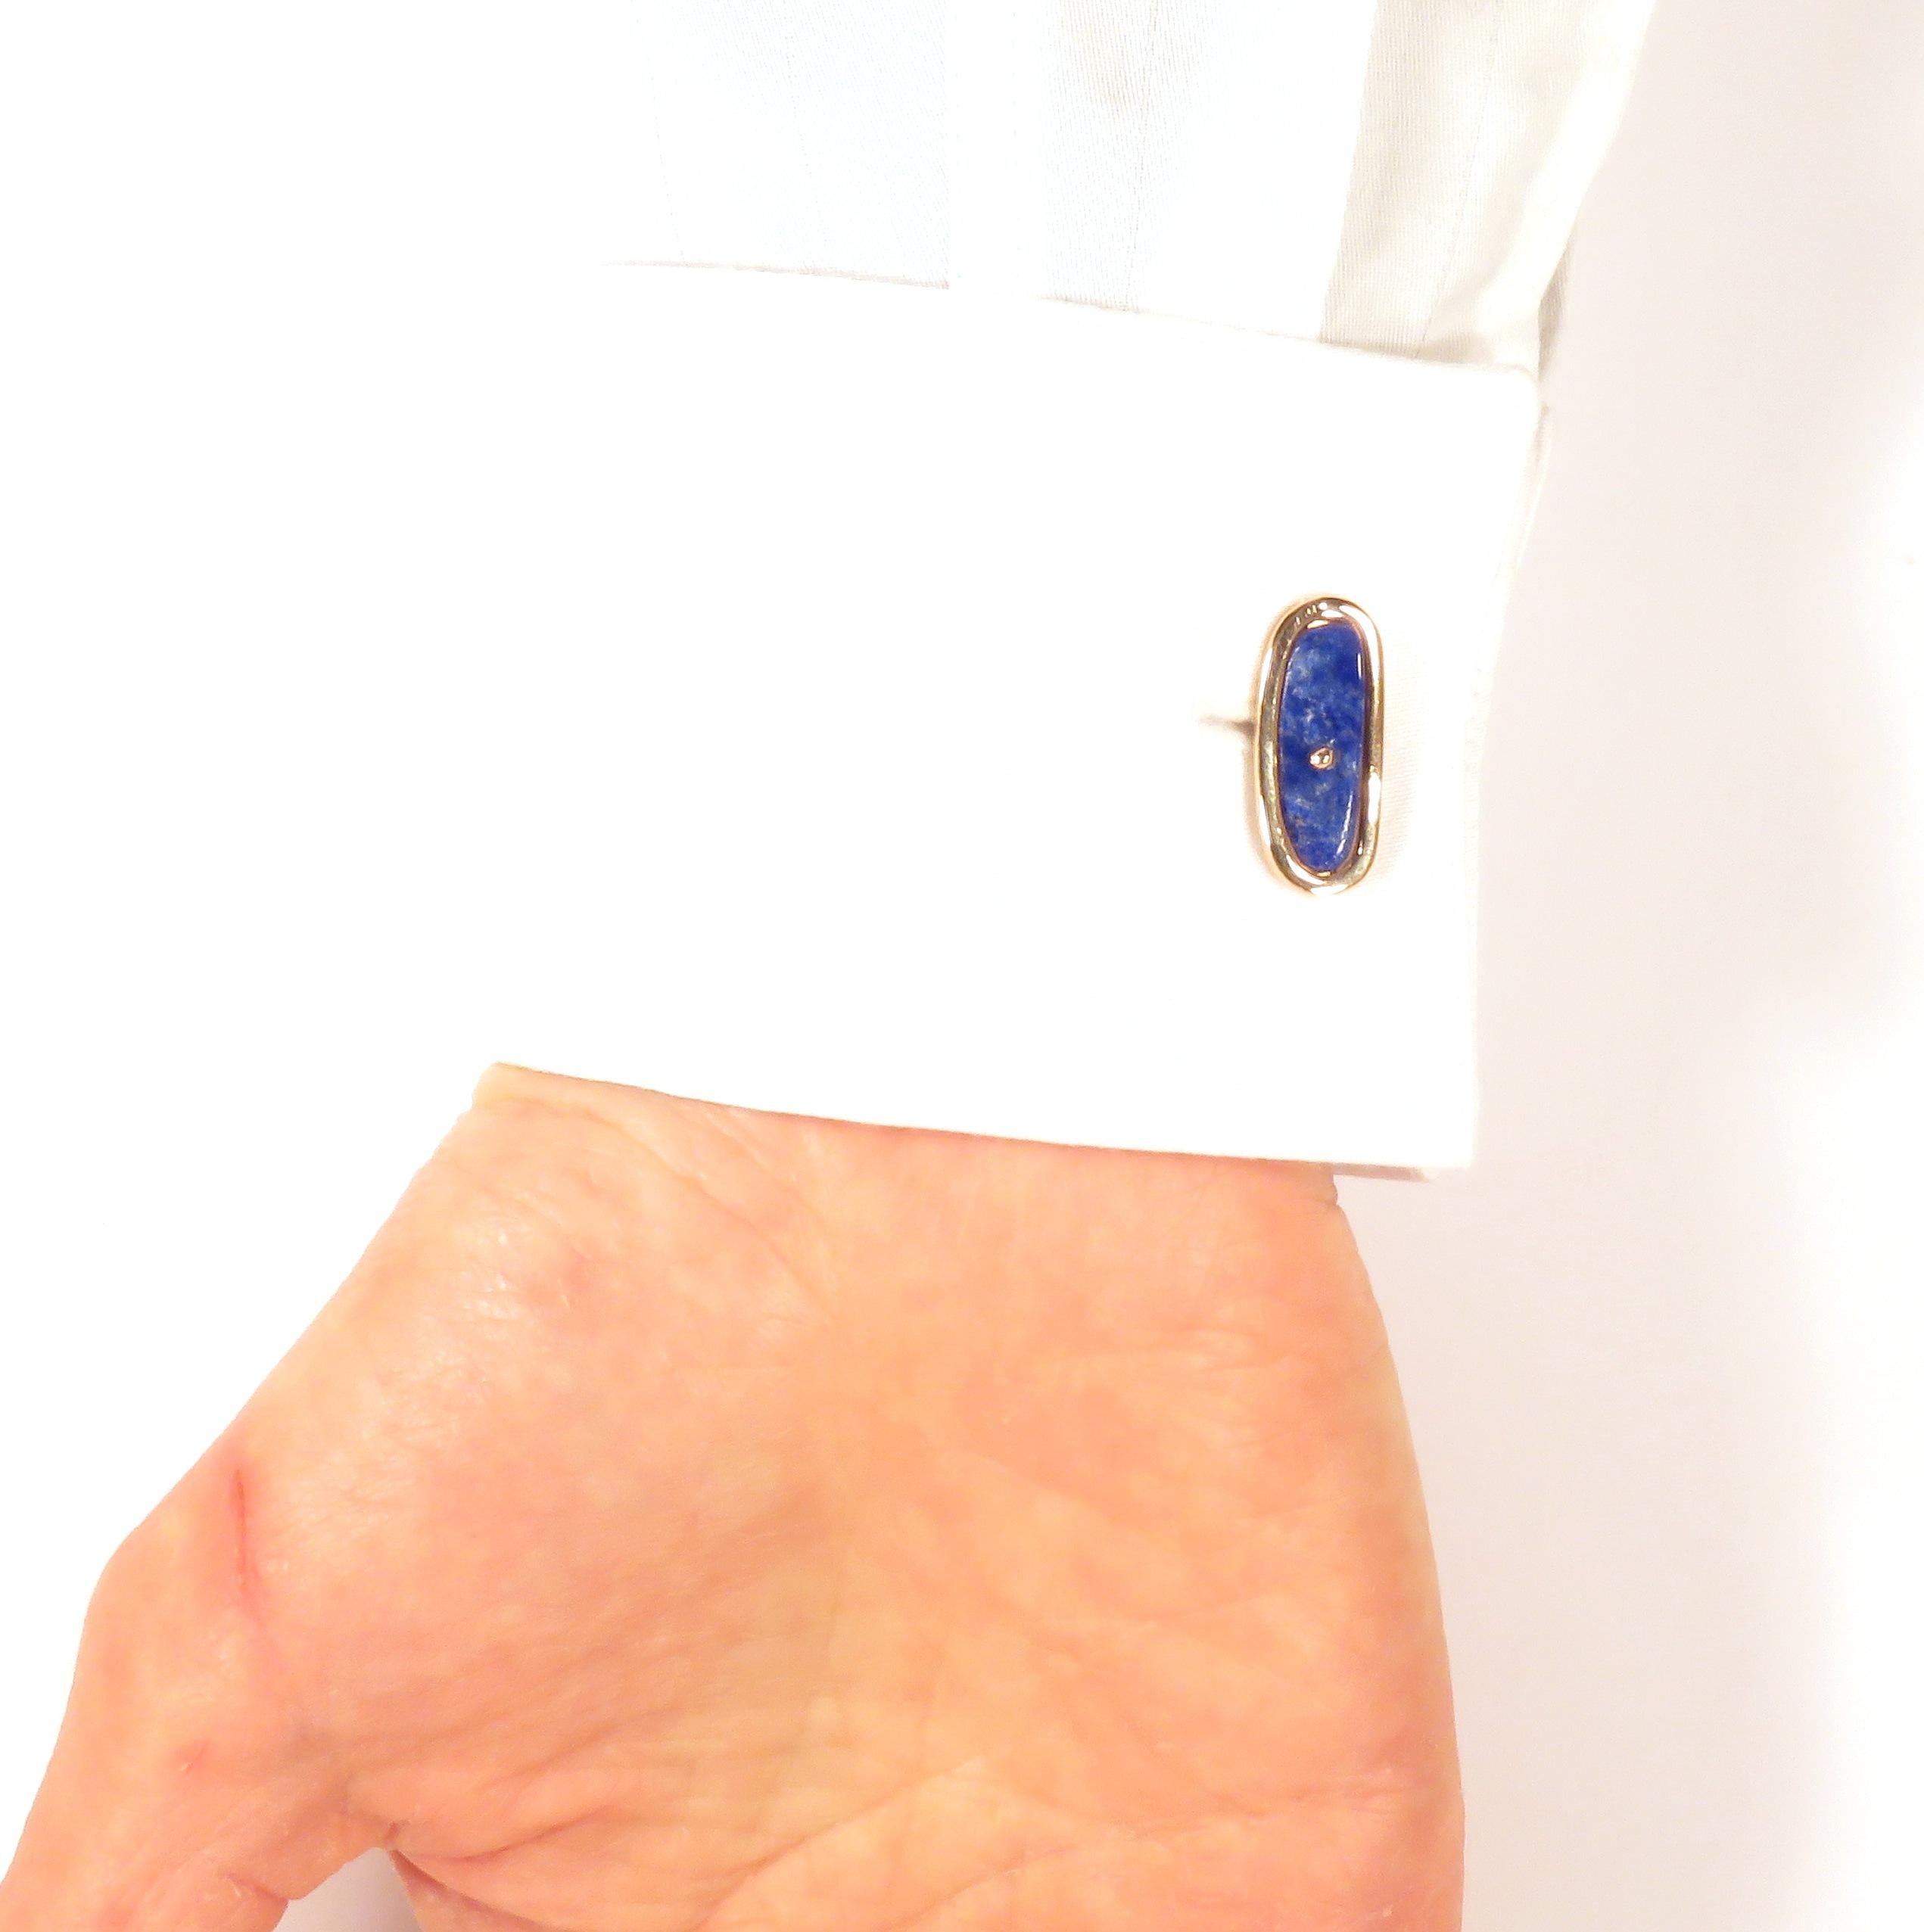 Men's Cufflinks 9 Karat Rose Gold Lapis Lazuli Handcrafted in Italy by Botta Gioielli